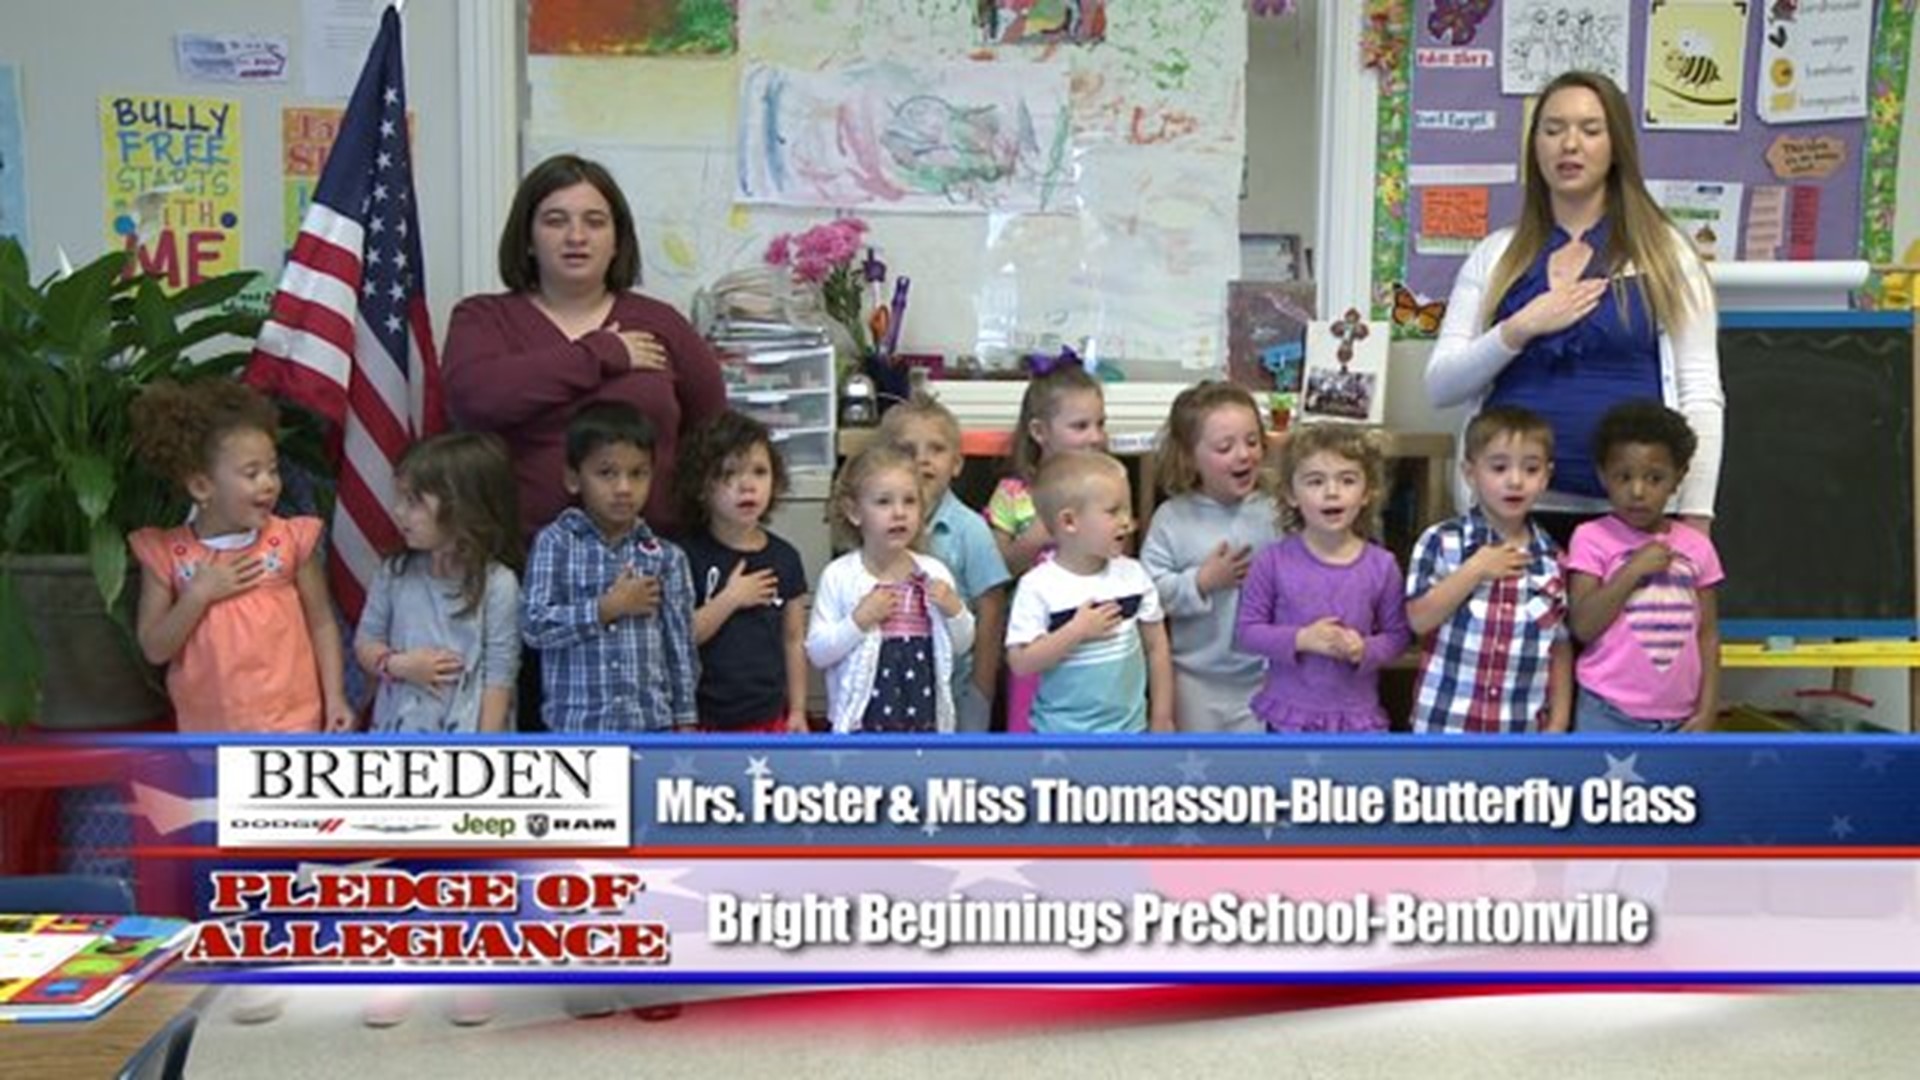 Bright Beginnings Preschool - Bentonville, Mrs. Foster & Ms. Thomasson - Blue Butterfly Class